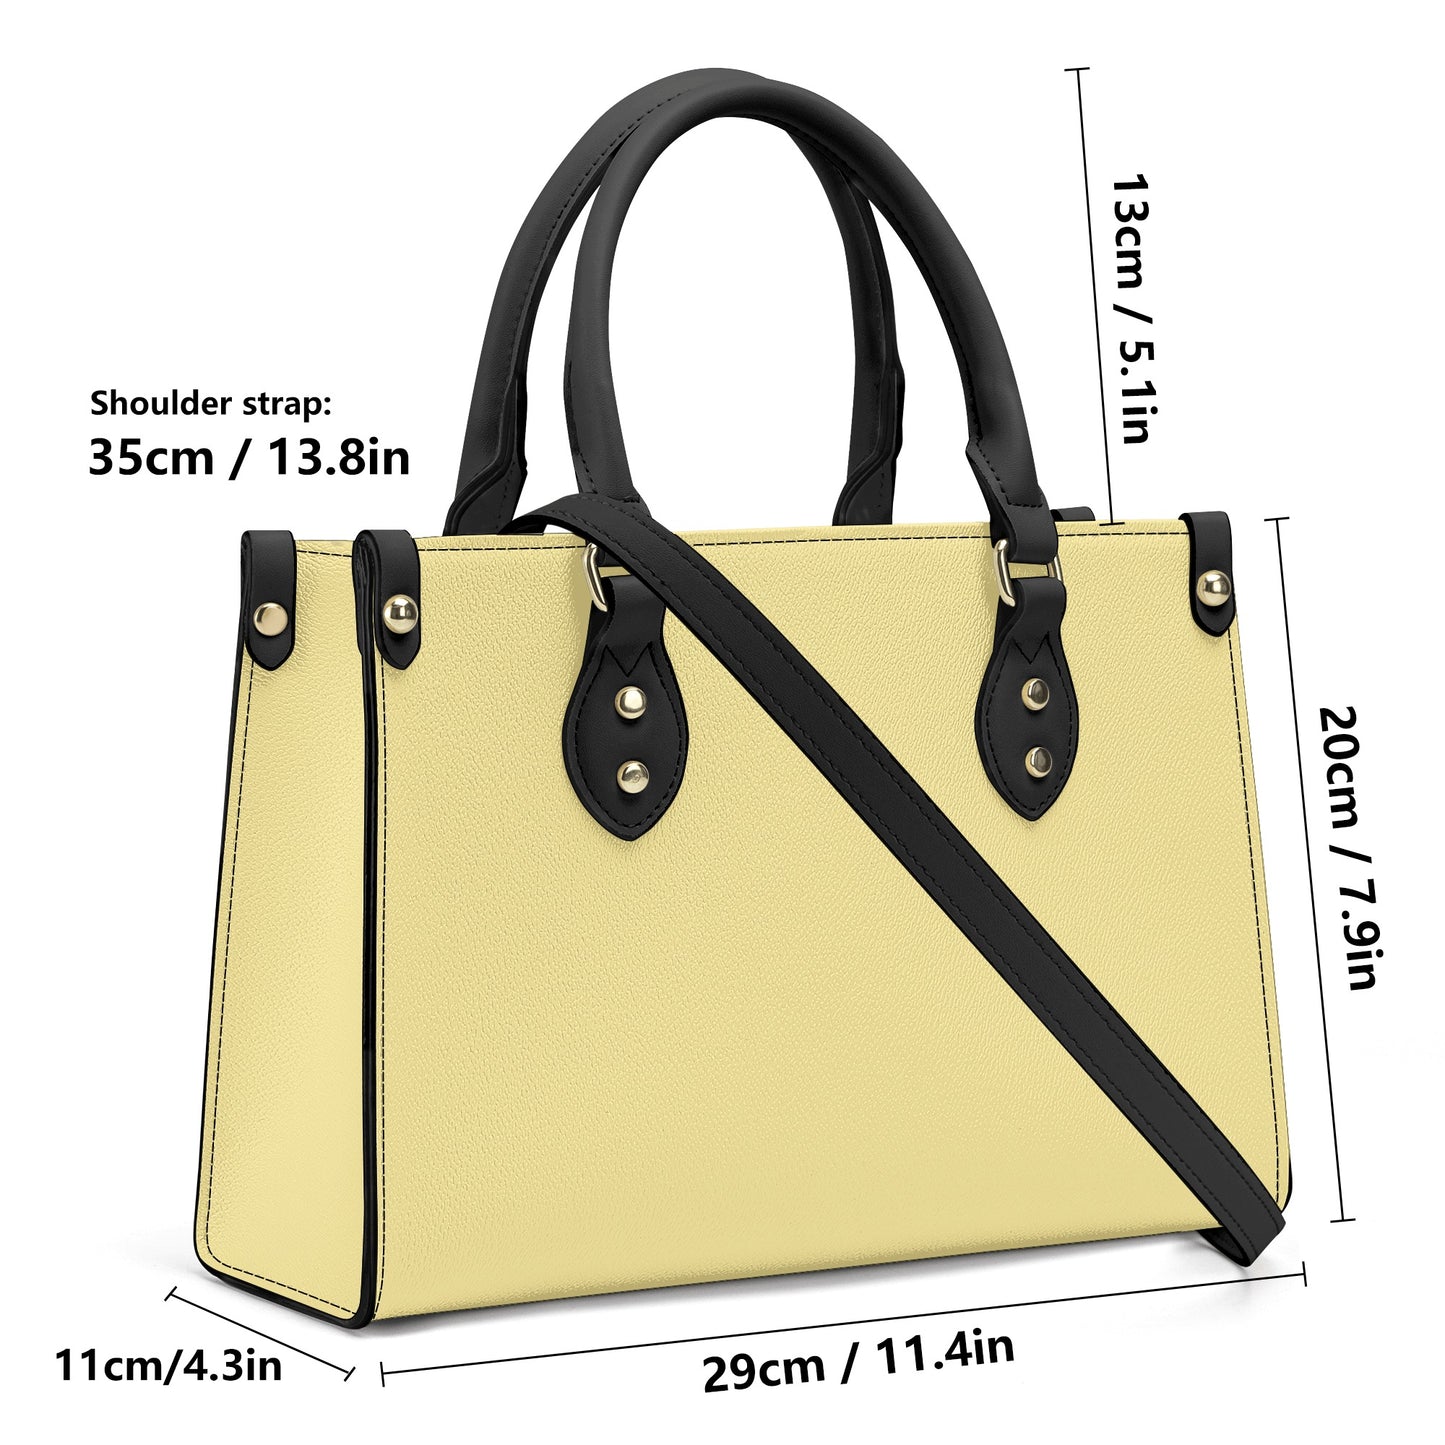 Ina - Luxury Women Handbag